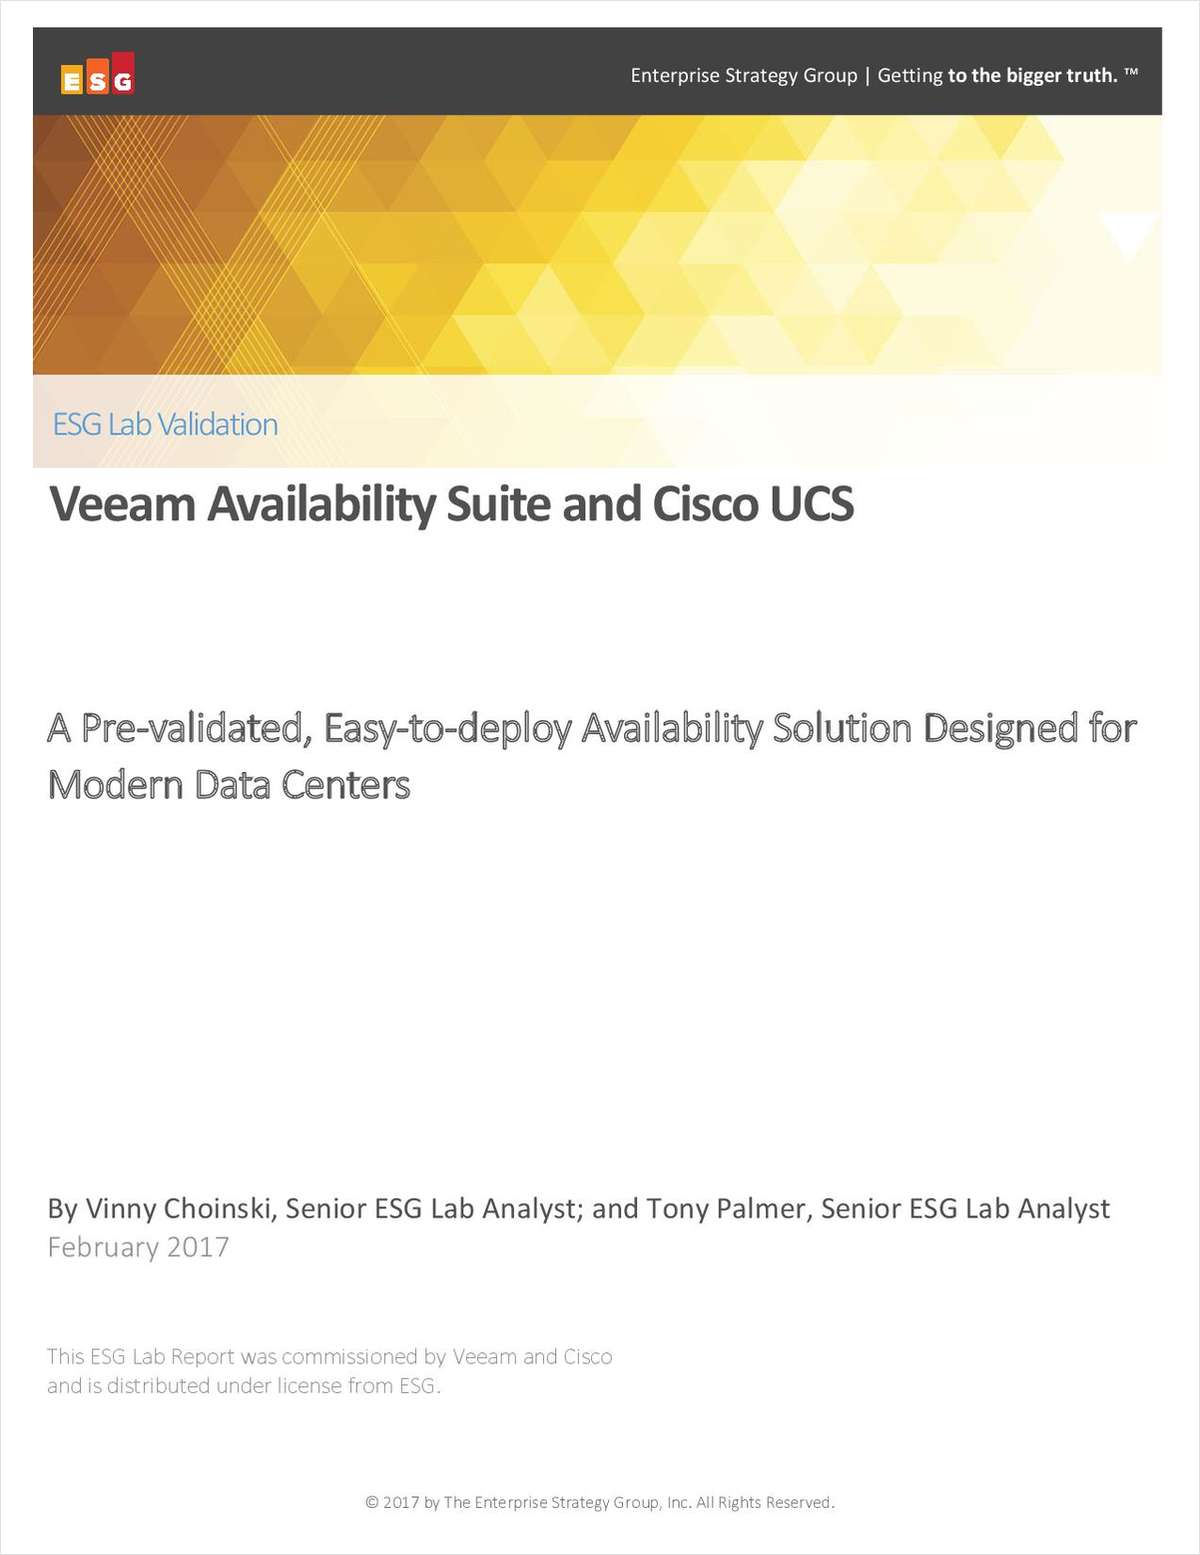 ESG Lab Validation: Veeam Availability Suite and Cisco UCS